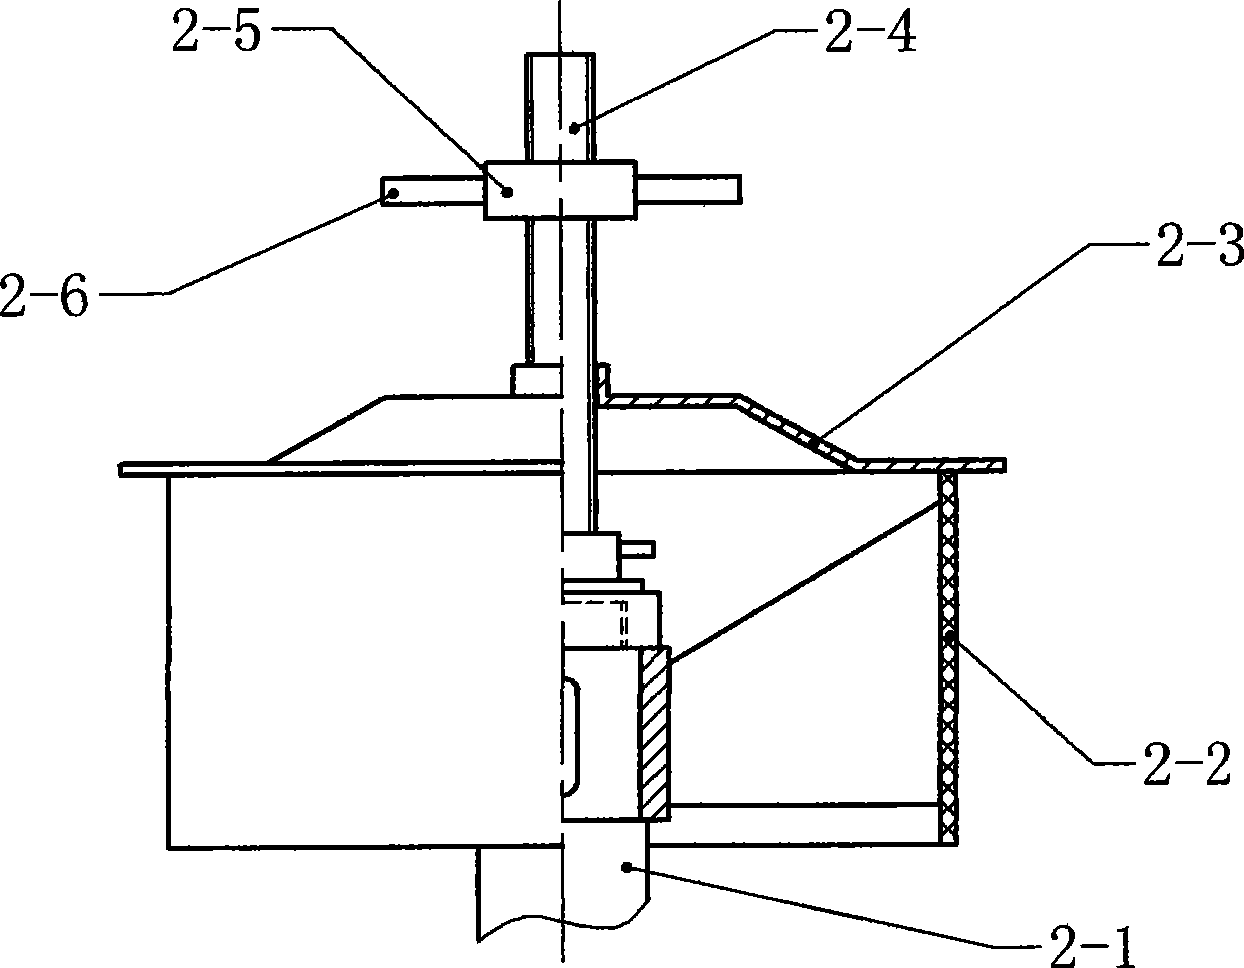 Metal barrel flanging device